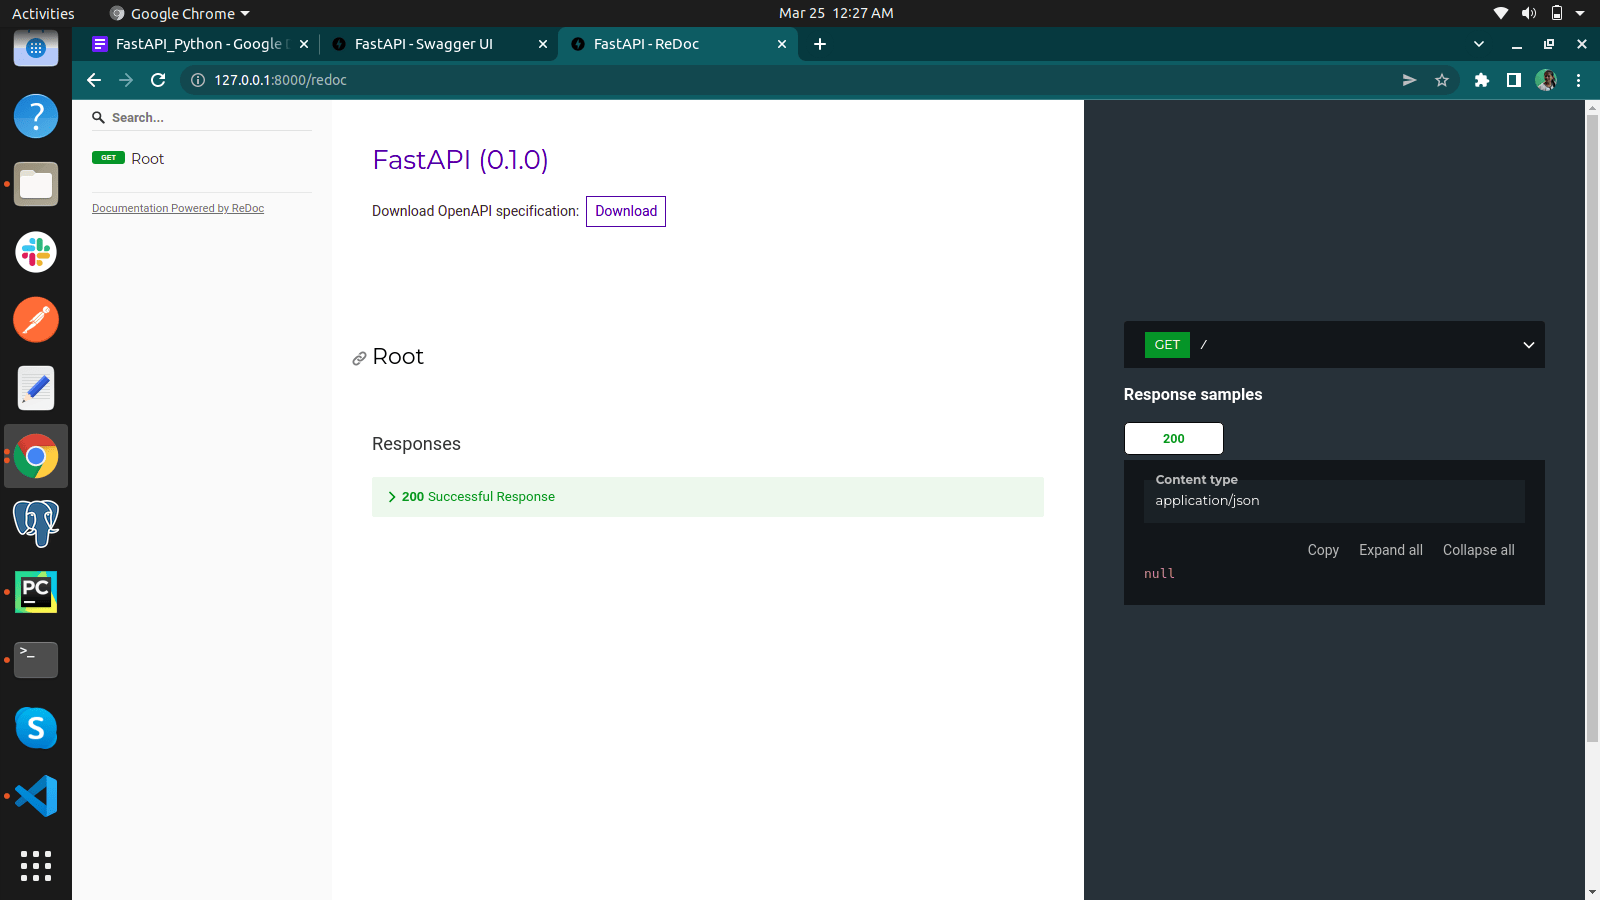 Alternate Example of FastAPI Swagger UI